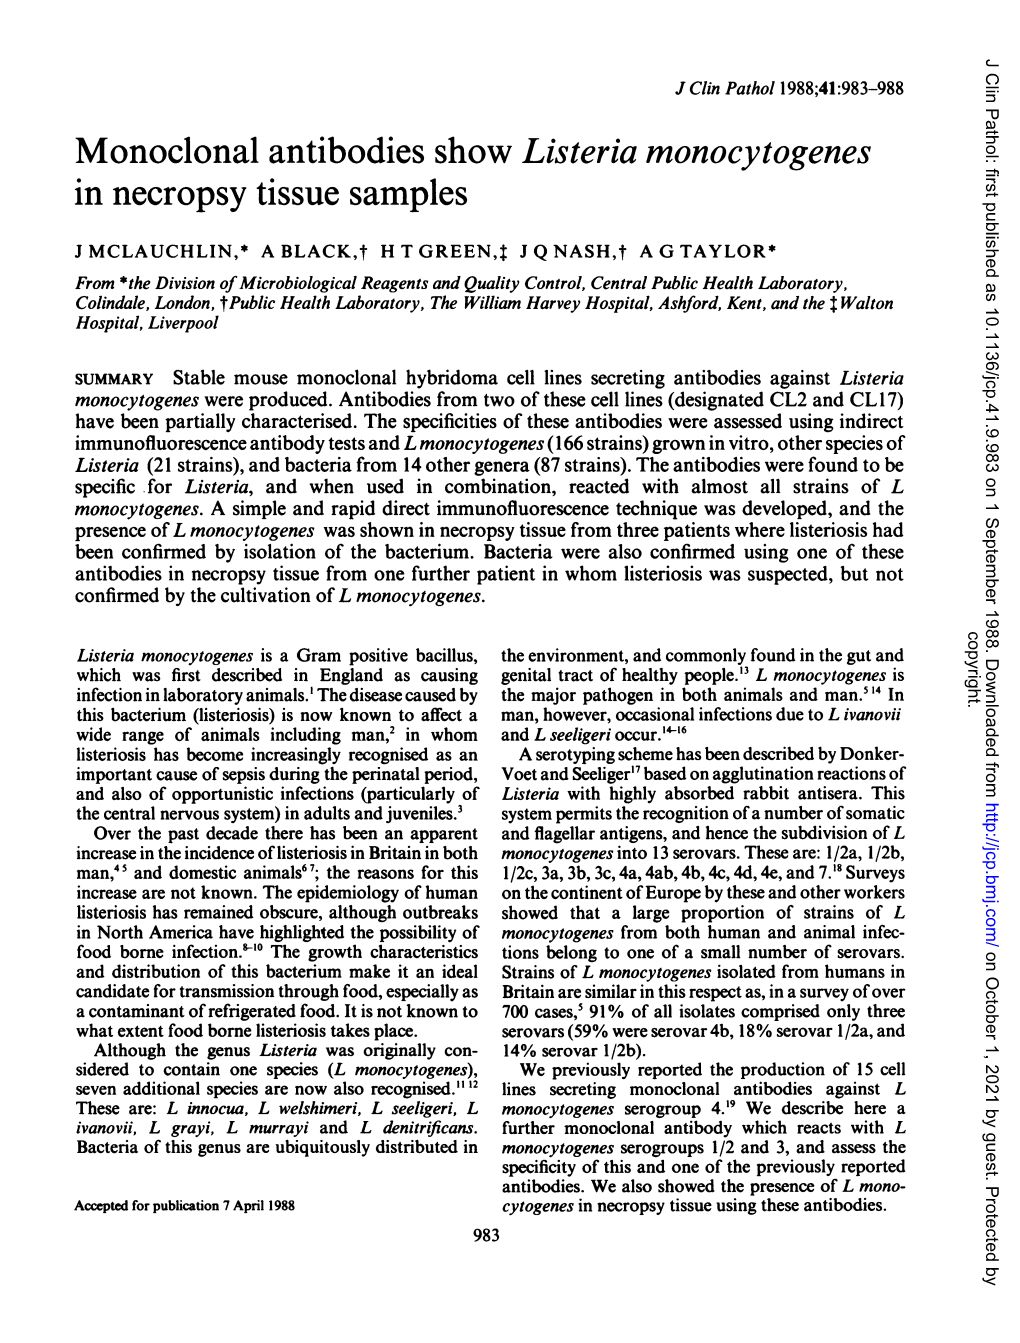 Monoclonal Antibodies Show Listeria Monocytogenes in Necropsy Tissue Samples